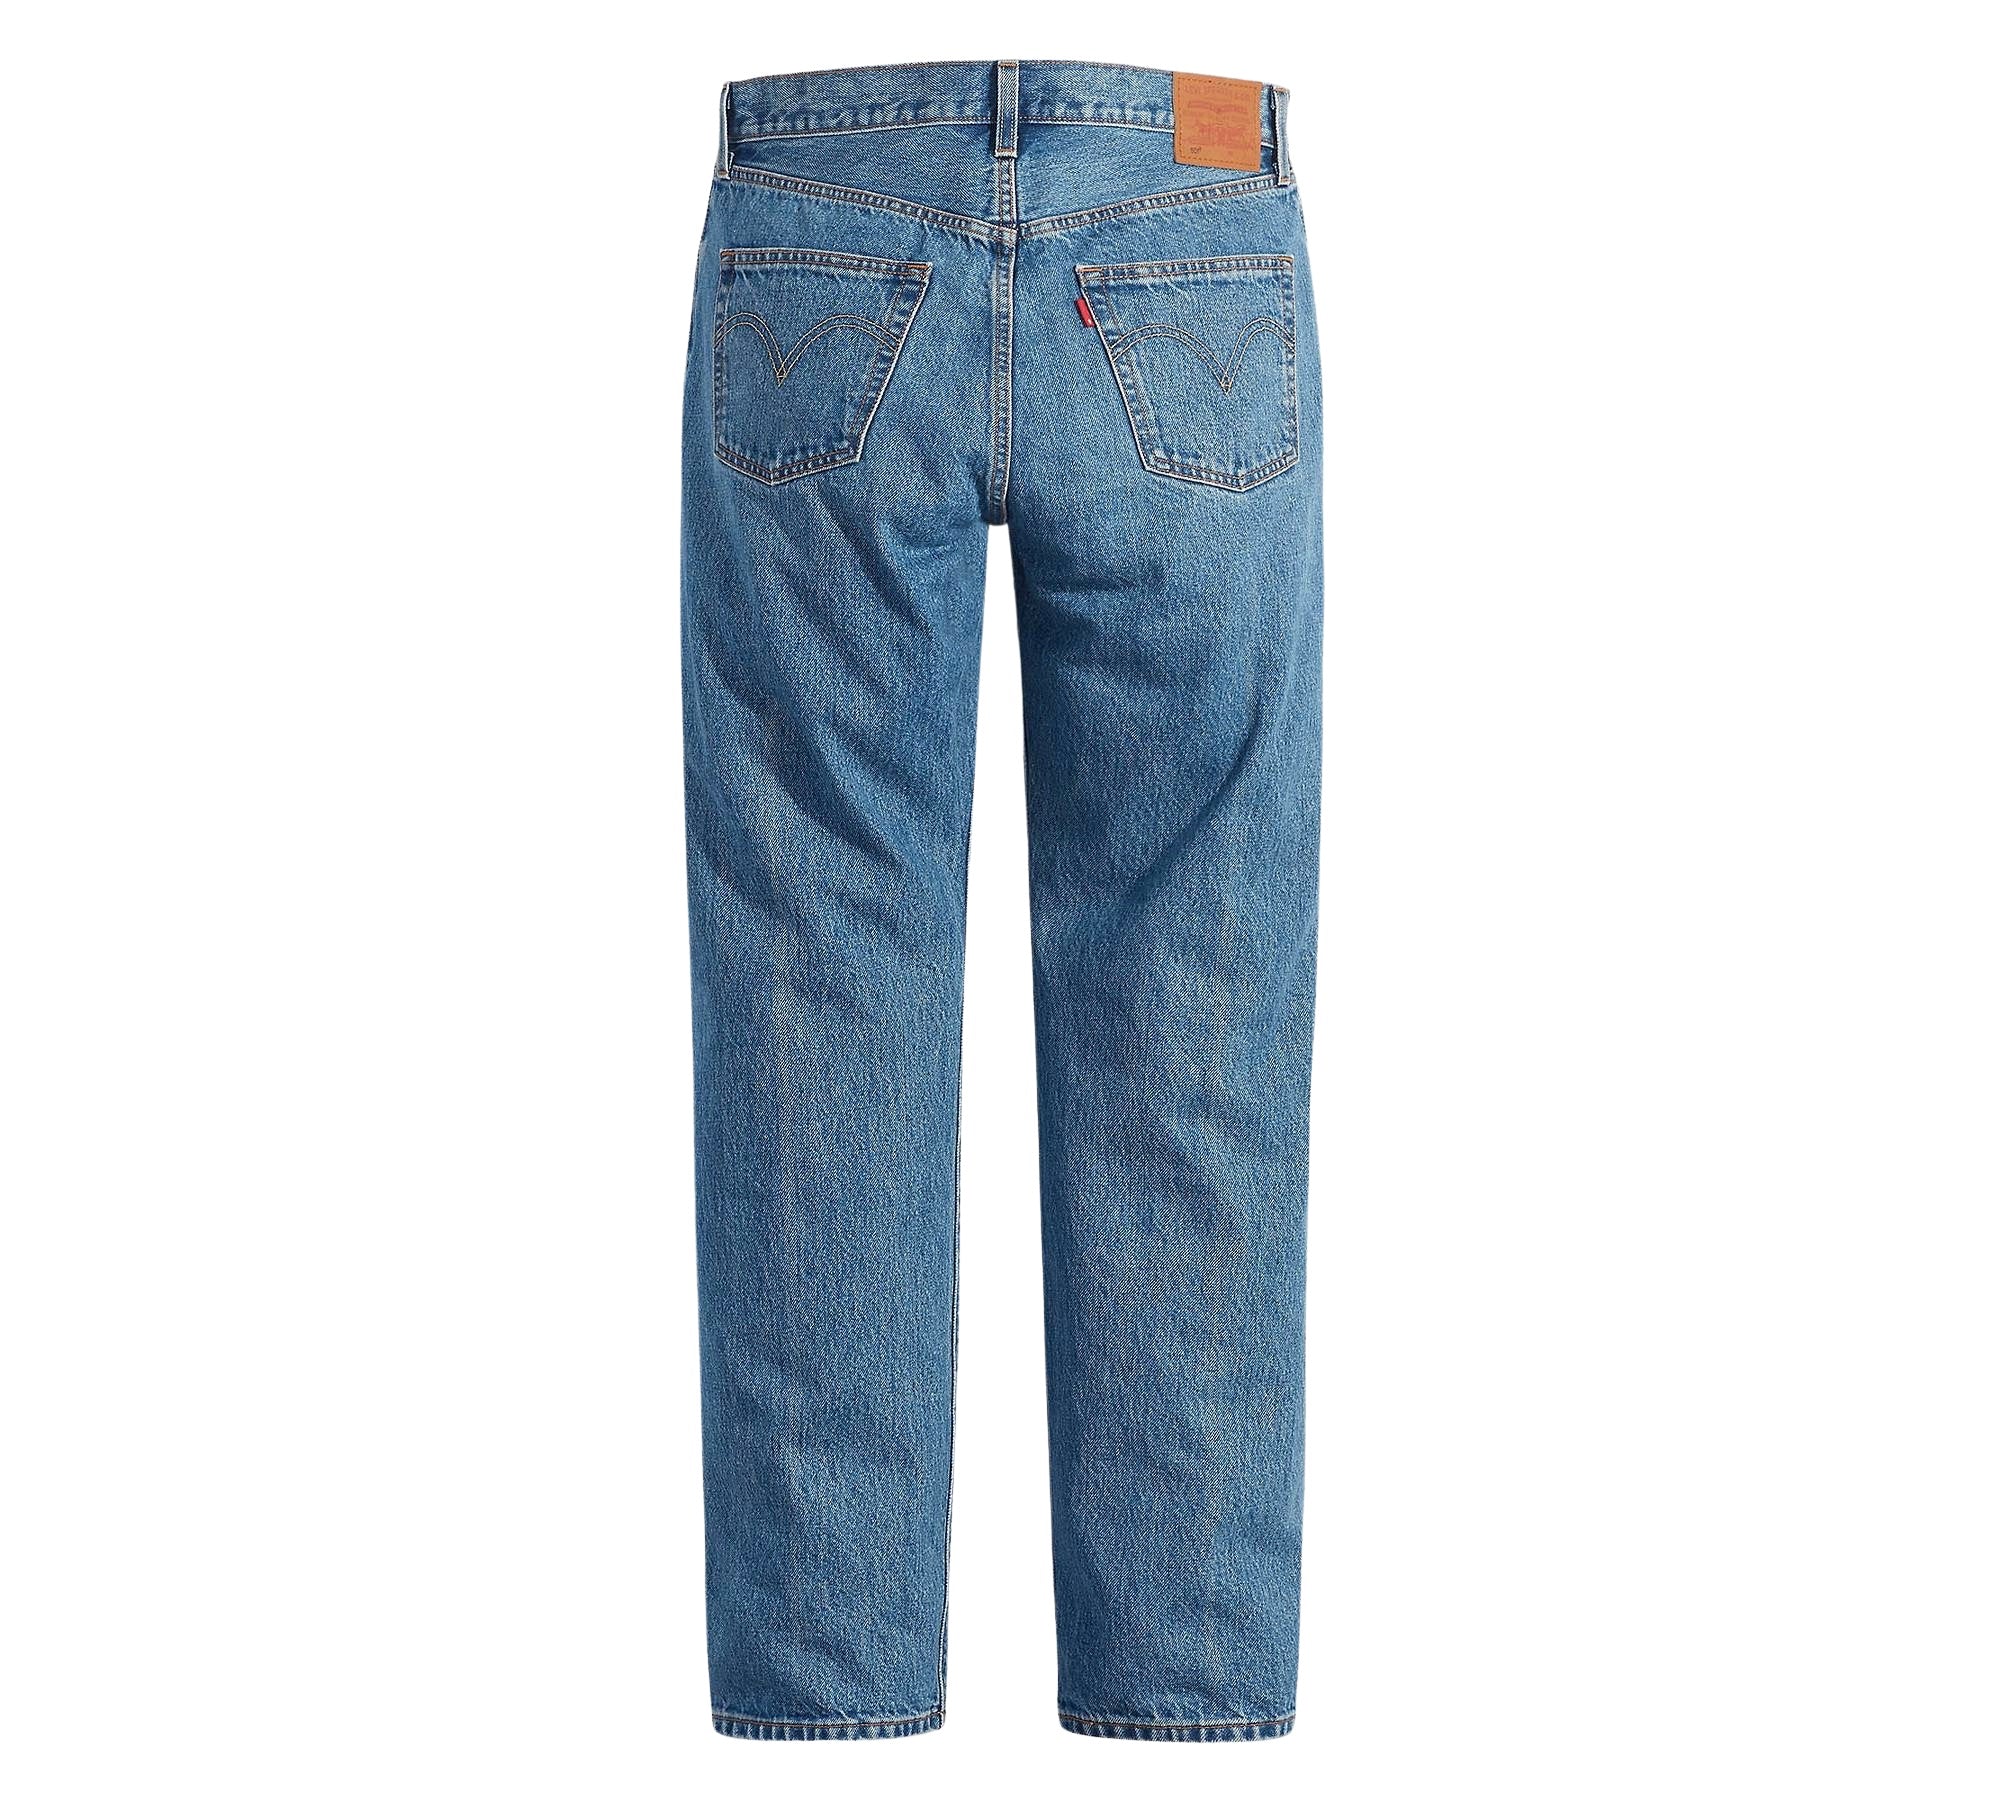 4 Pack - Vintage LEVI'S Classic Blue Zip Fly Jeans - Waist 31 - Length 34 - Vintage Superstore Online